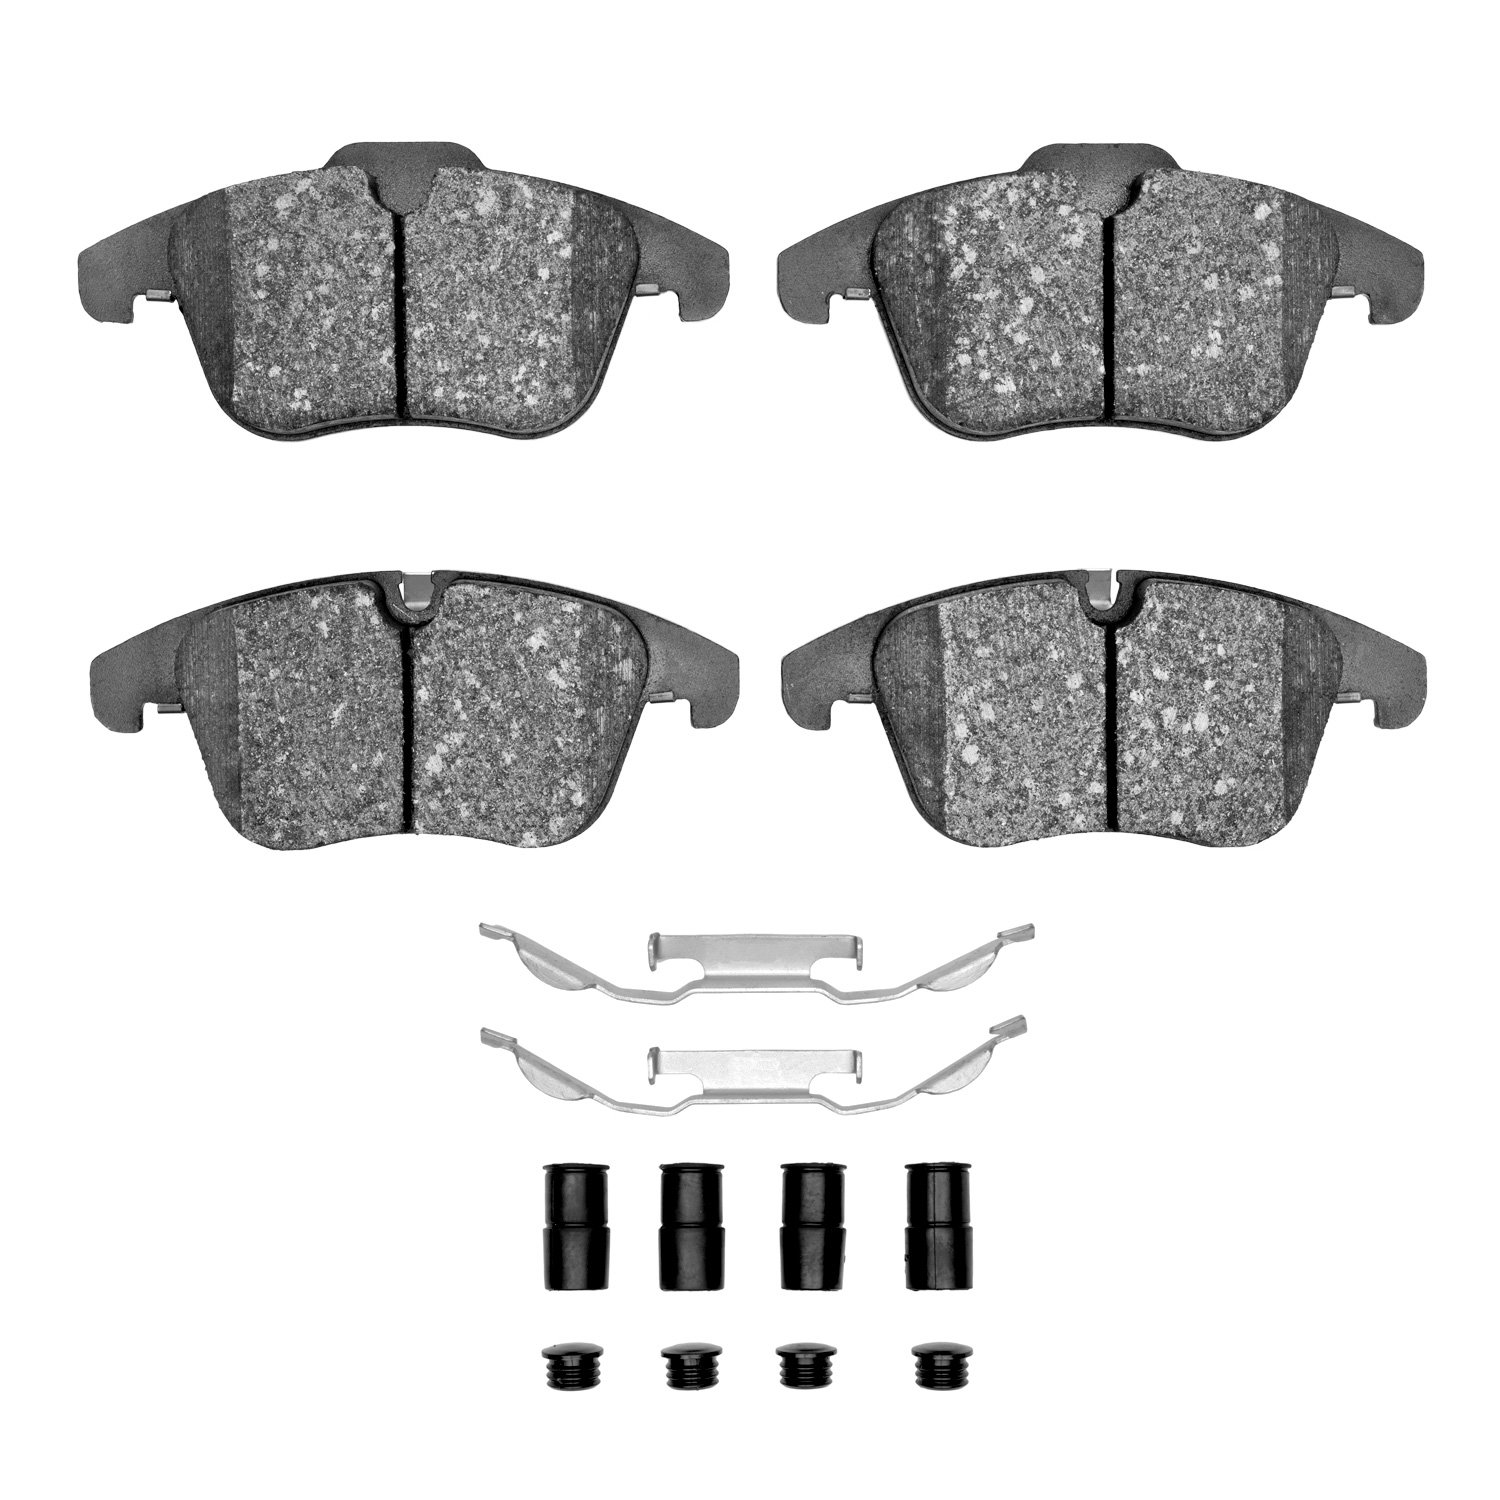 Optimum OE Brake Pads & Hardware Kit, 2006-2018 Fits Multiple Makes/Models, Position: Front